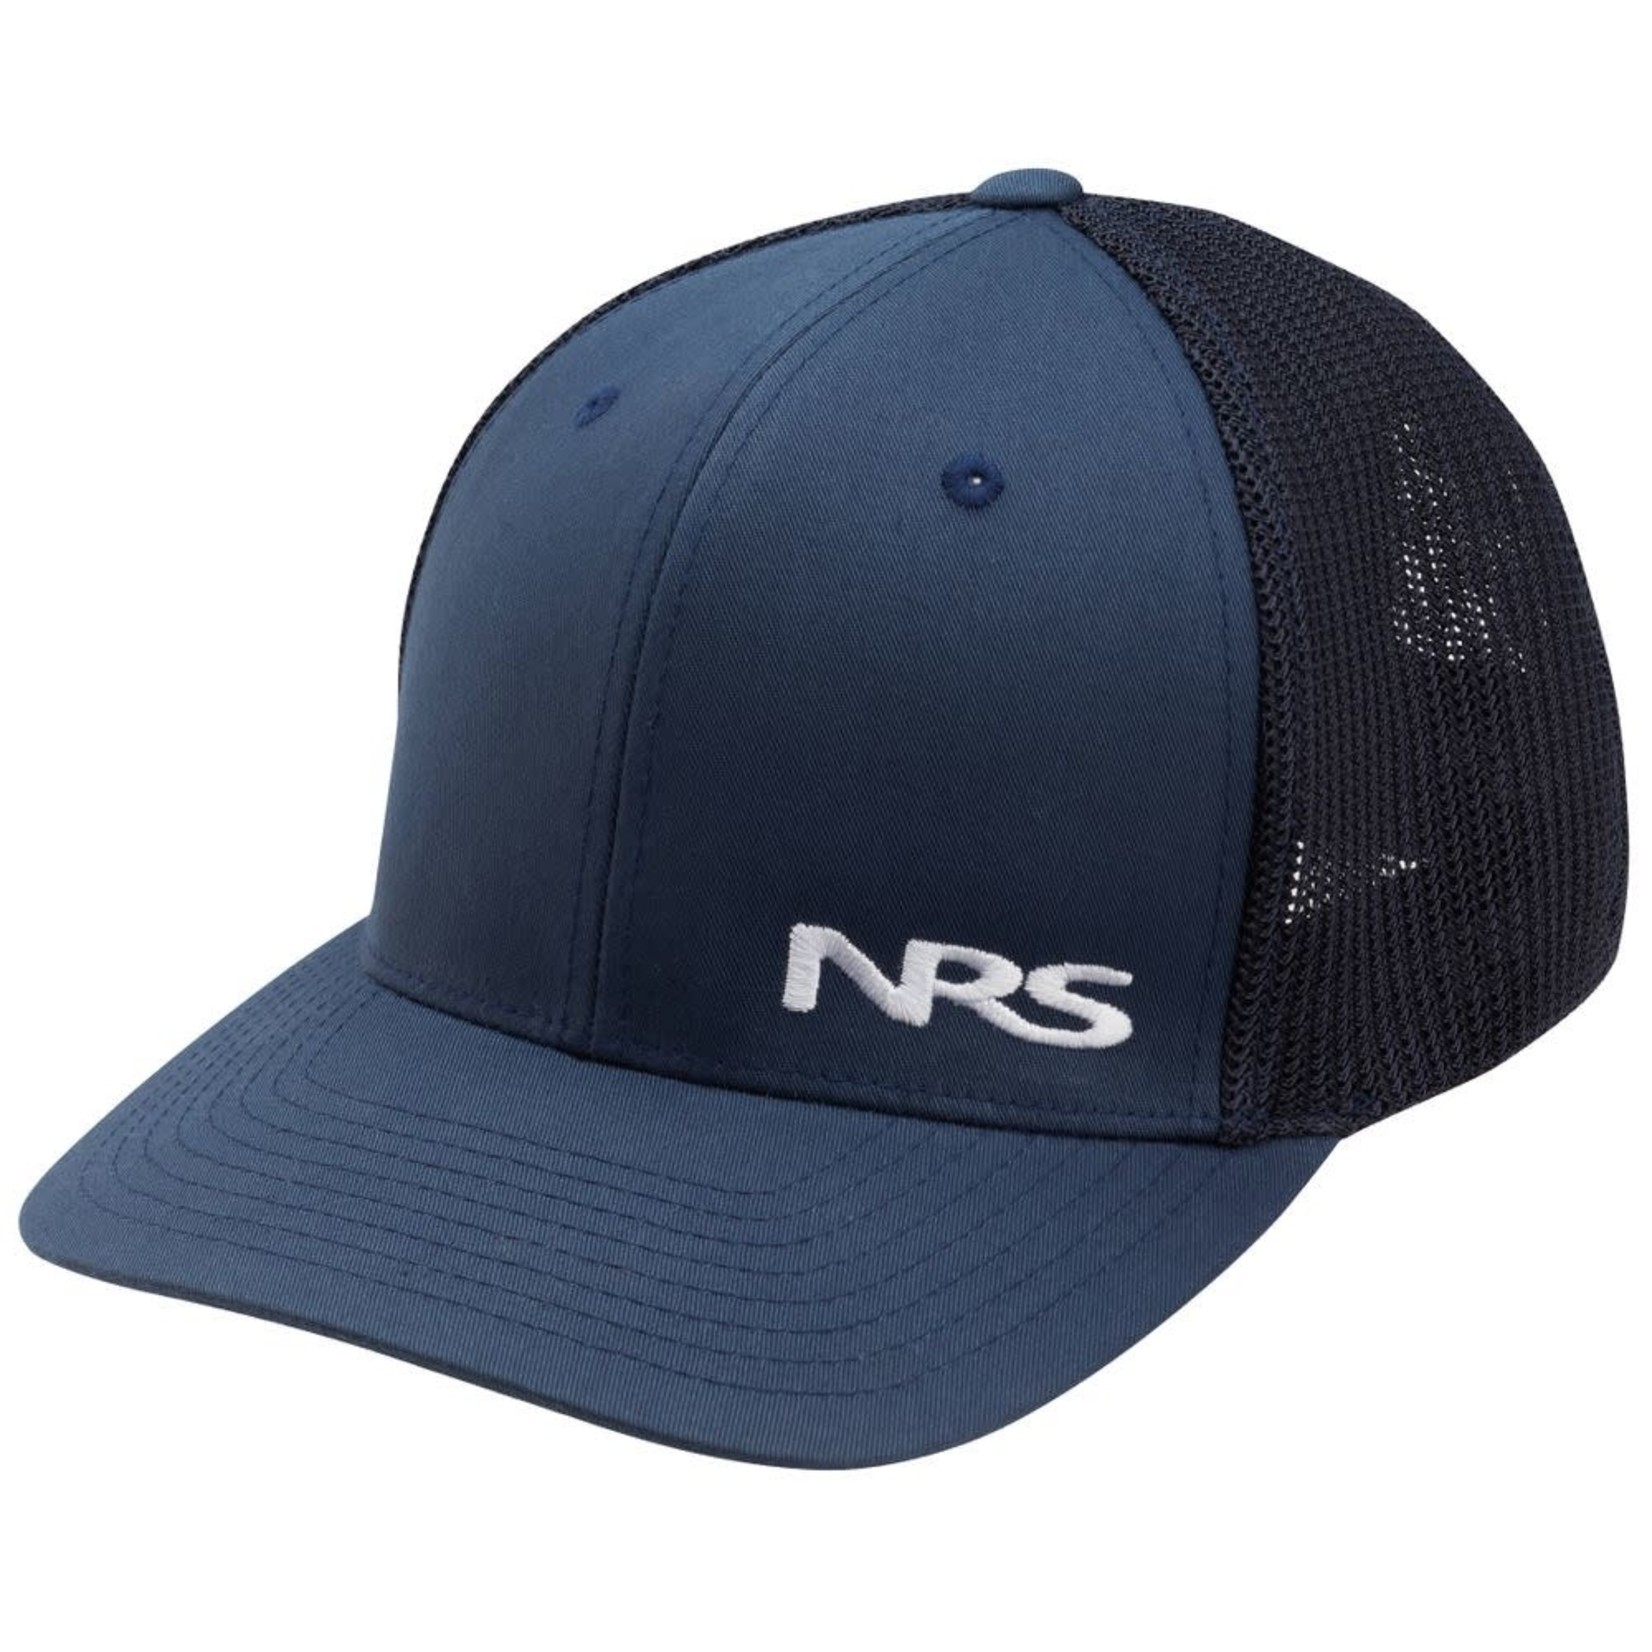 NRS NRS Mesh Flexfit Hat